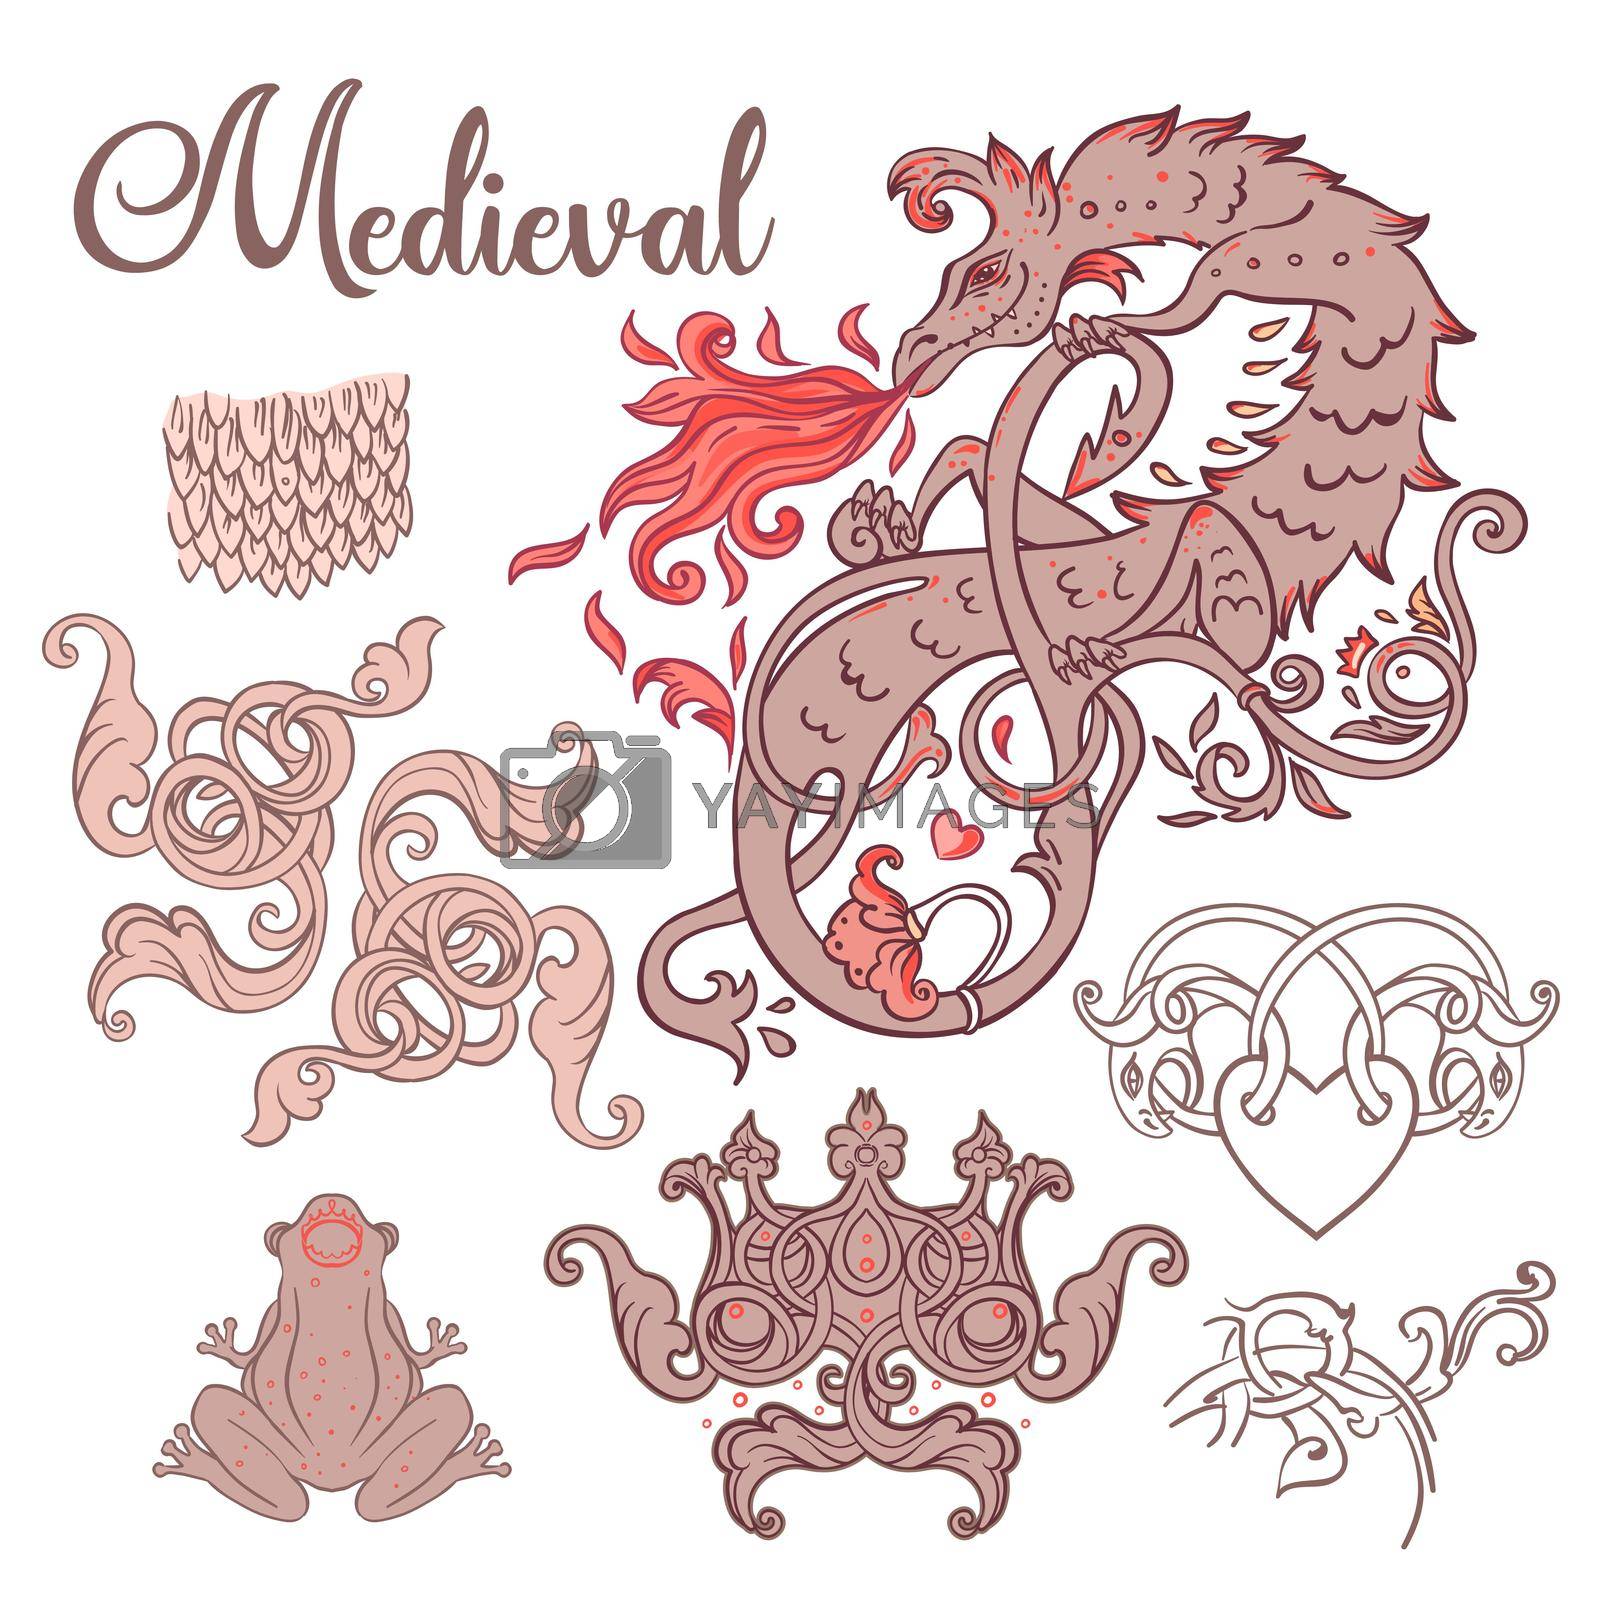 Royalty free image of Medieval style elements set. Mythological magic beast Basilisk, legendary bizarre creature. Decorative design. Vector illustration. by varka